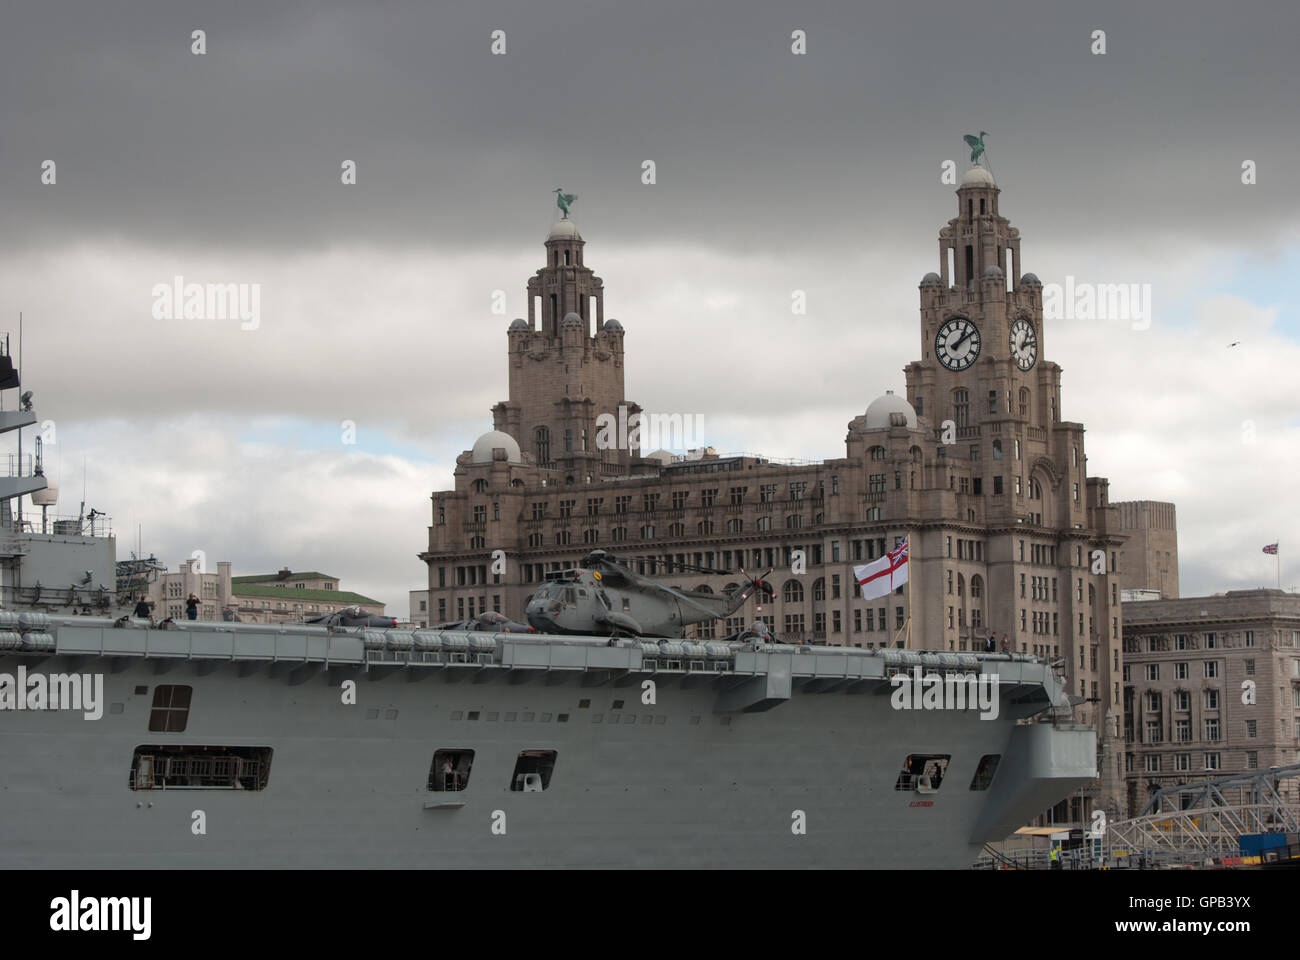 British Royal Navy Aircraft carrier HMS "Illustrious" visiting